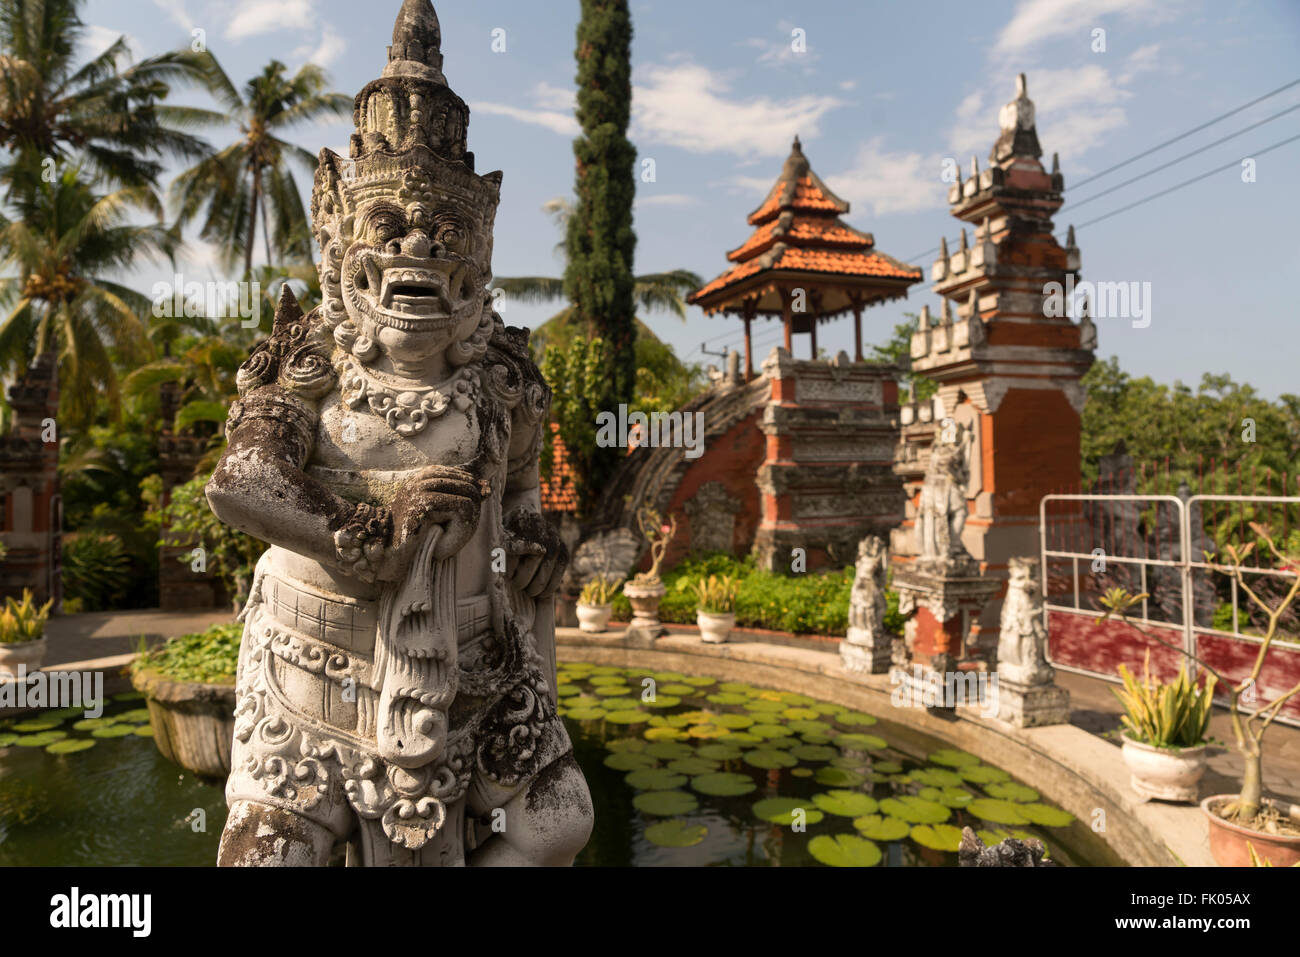 Statue at the Buddhist temple Brahma Vihara Arama in Banjar, Lovina, Bali, Indonesia Stock Photo